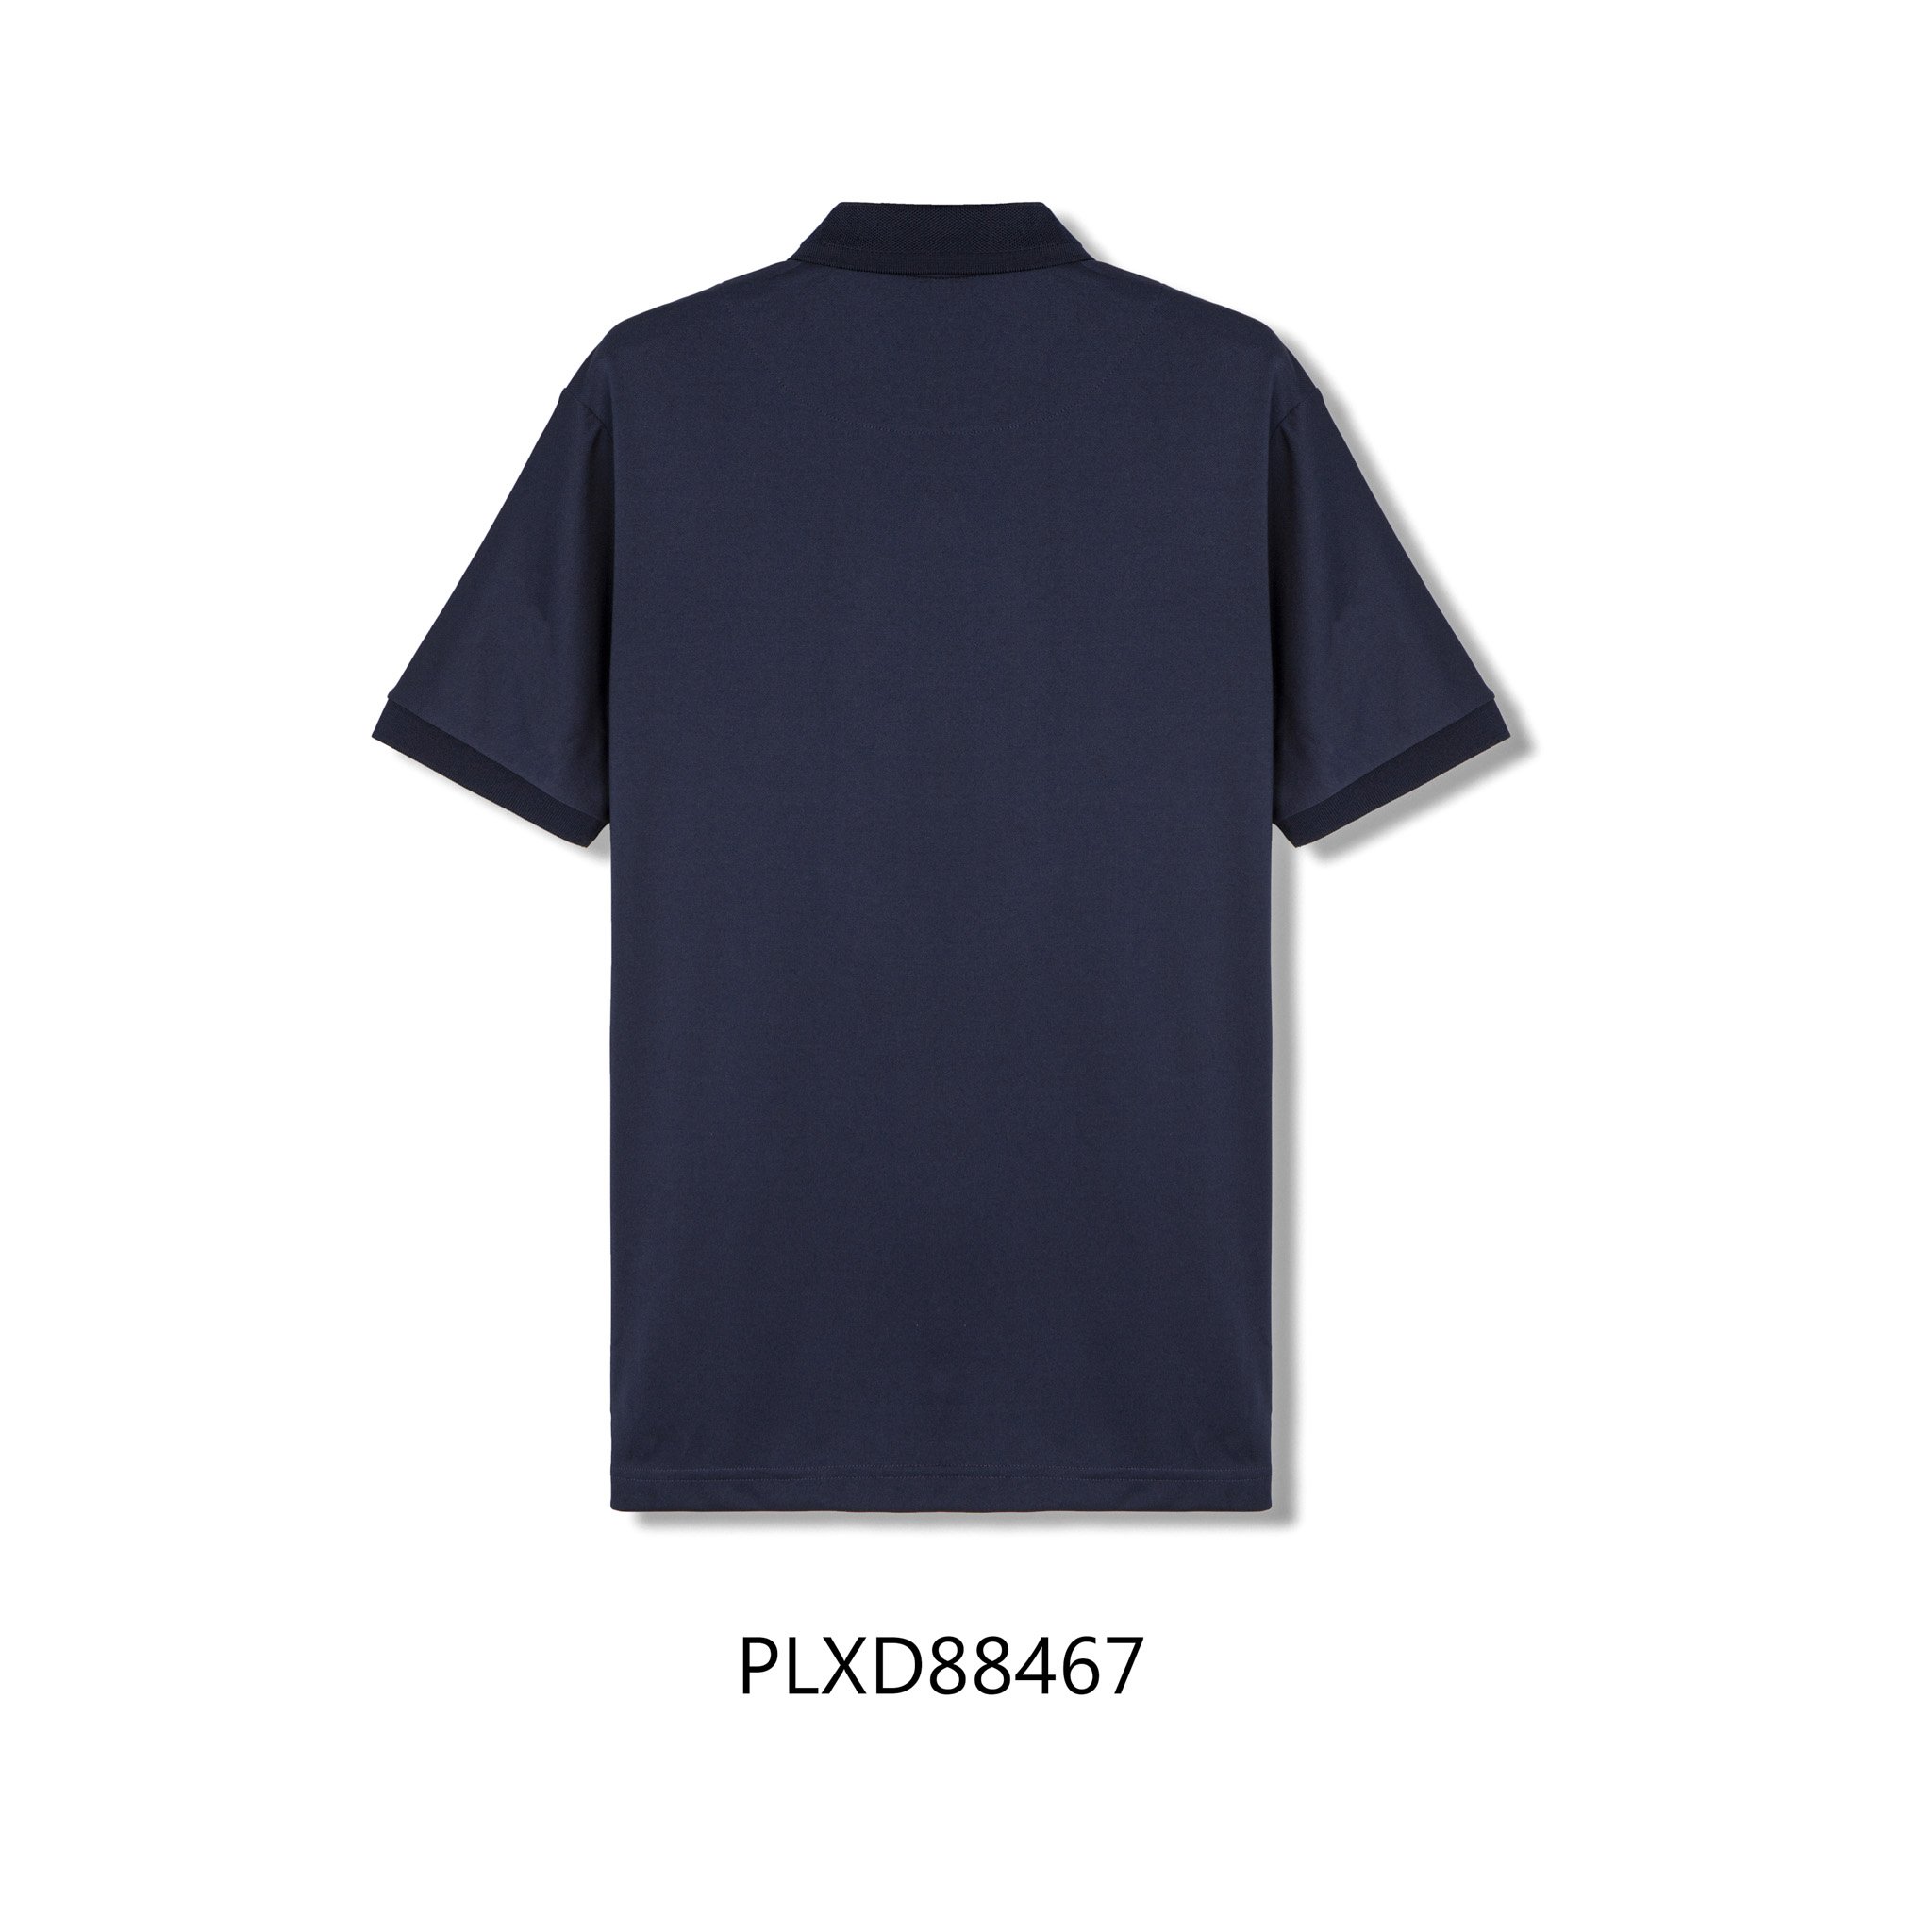 Áo polo vải cafe Old Sailor - O.S.L POLO - PREMIUM SERIES - NAVY - xanh đen - PLXD88467 - Big Size upto 5XL